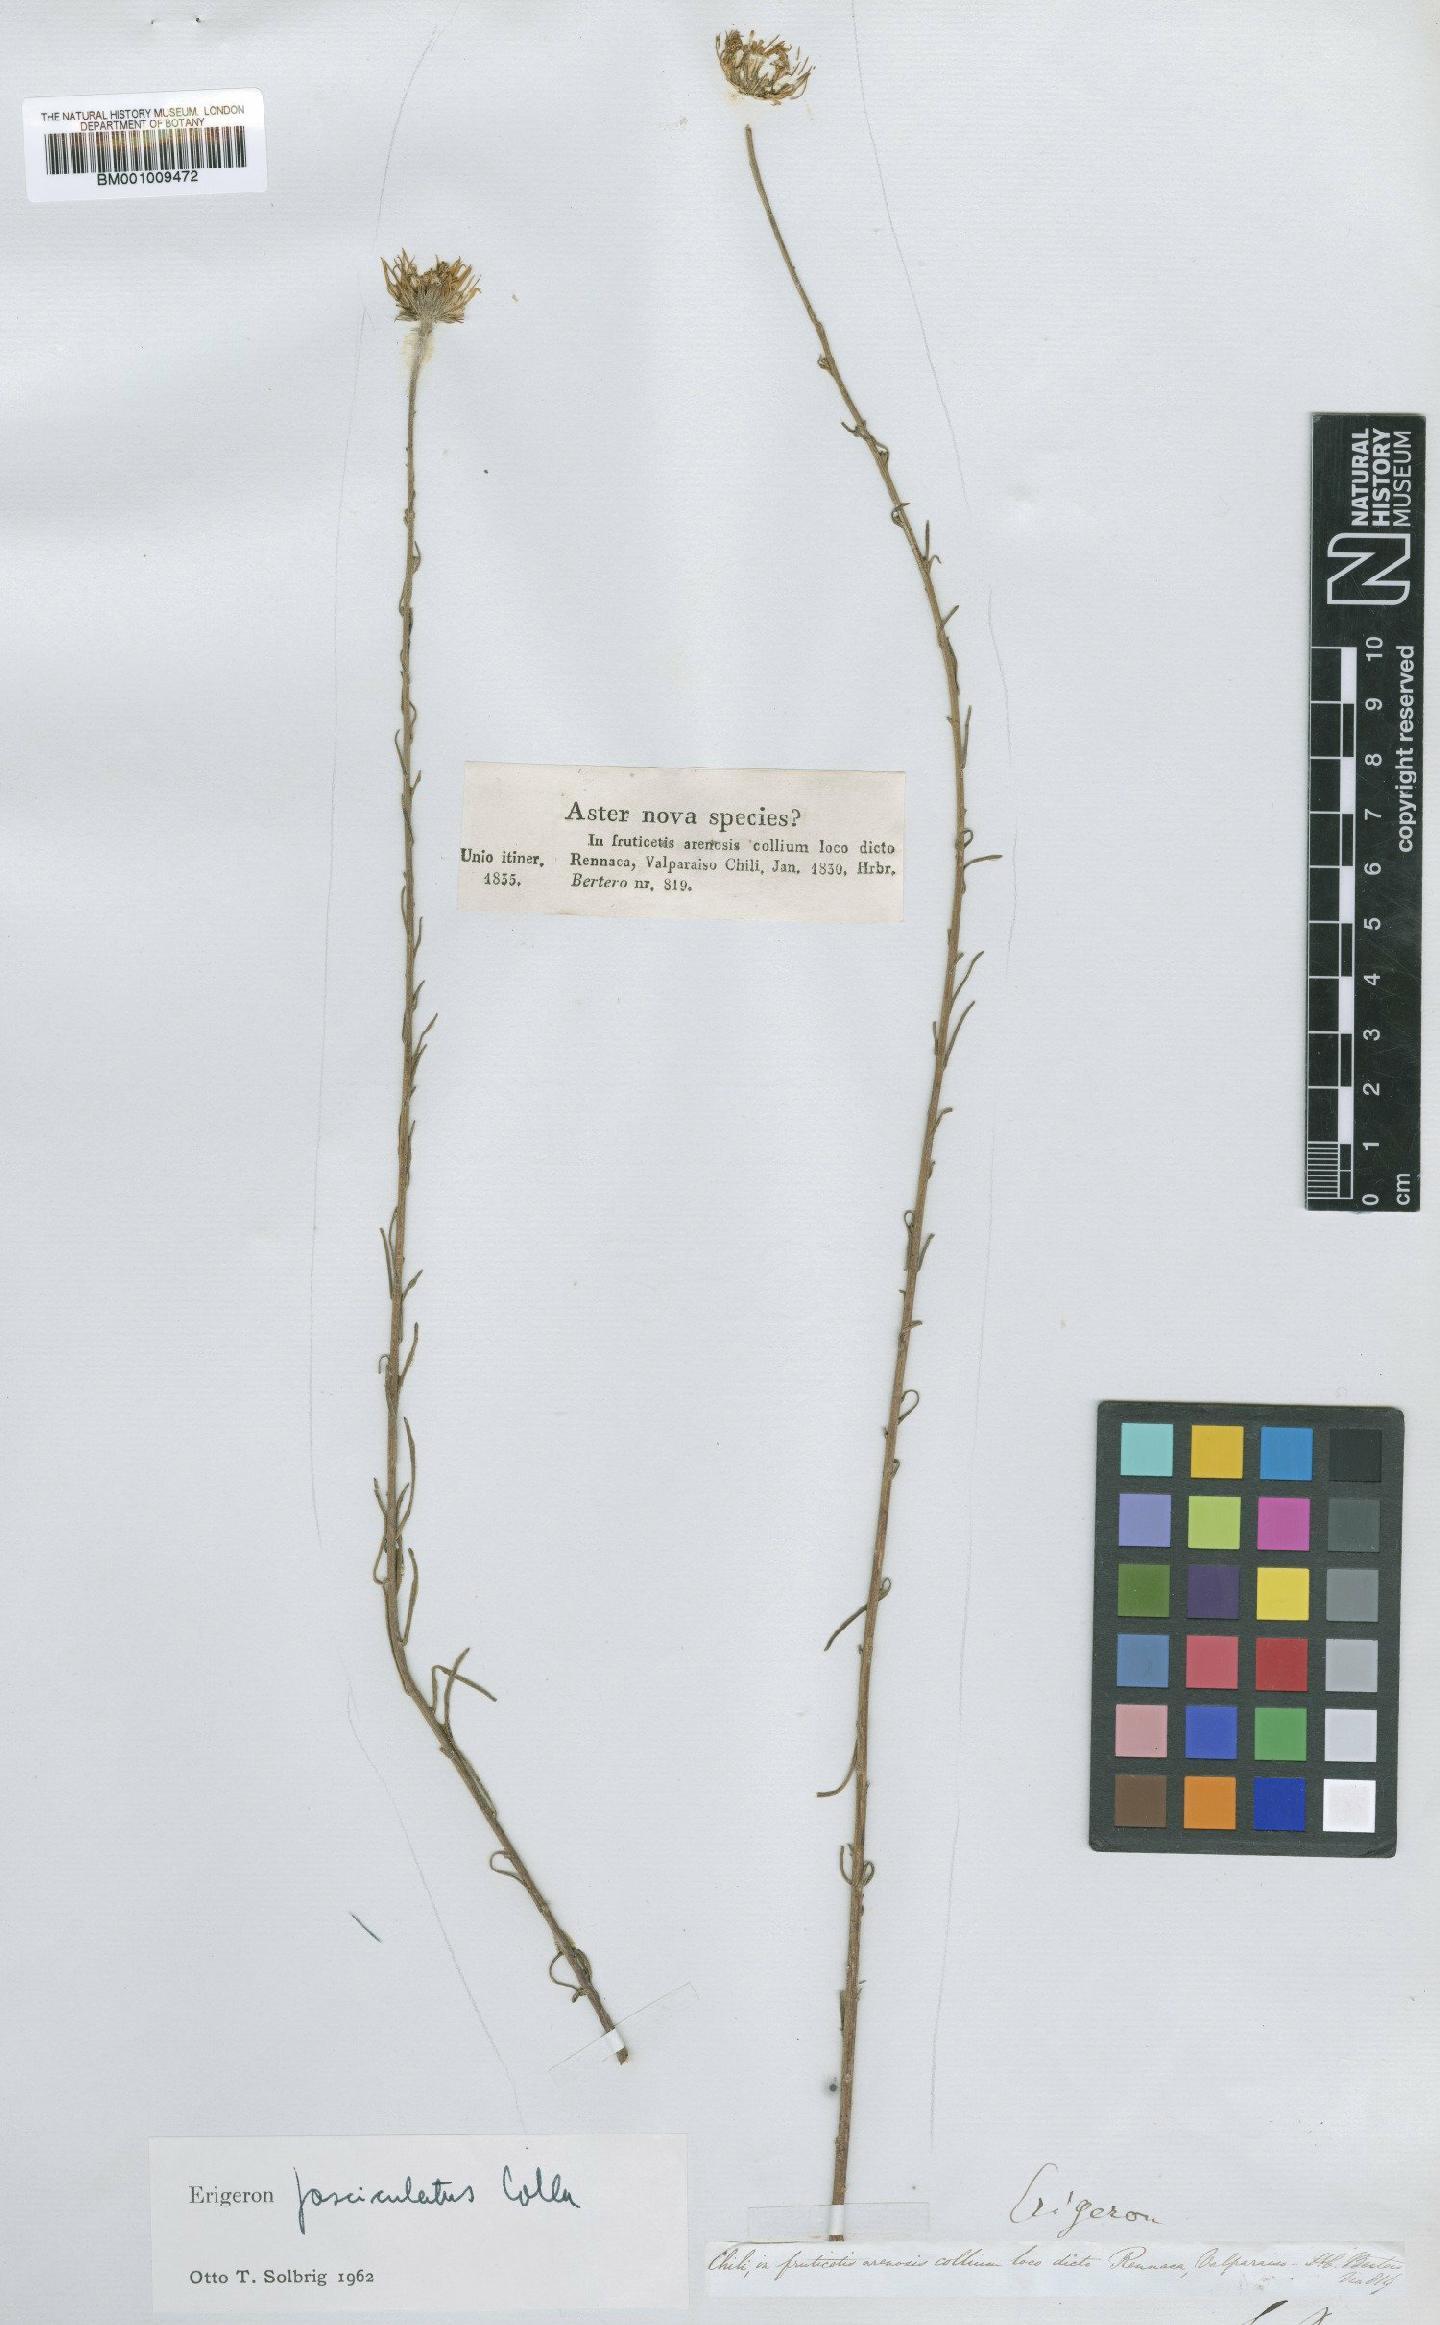 To NHMUK collection (Erigeron fasciculatus Colla; Type; NHMUK:ecatalogue:610981)